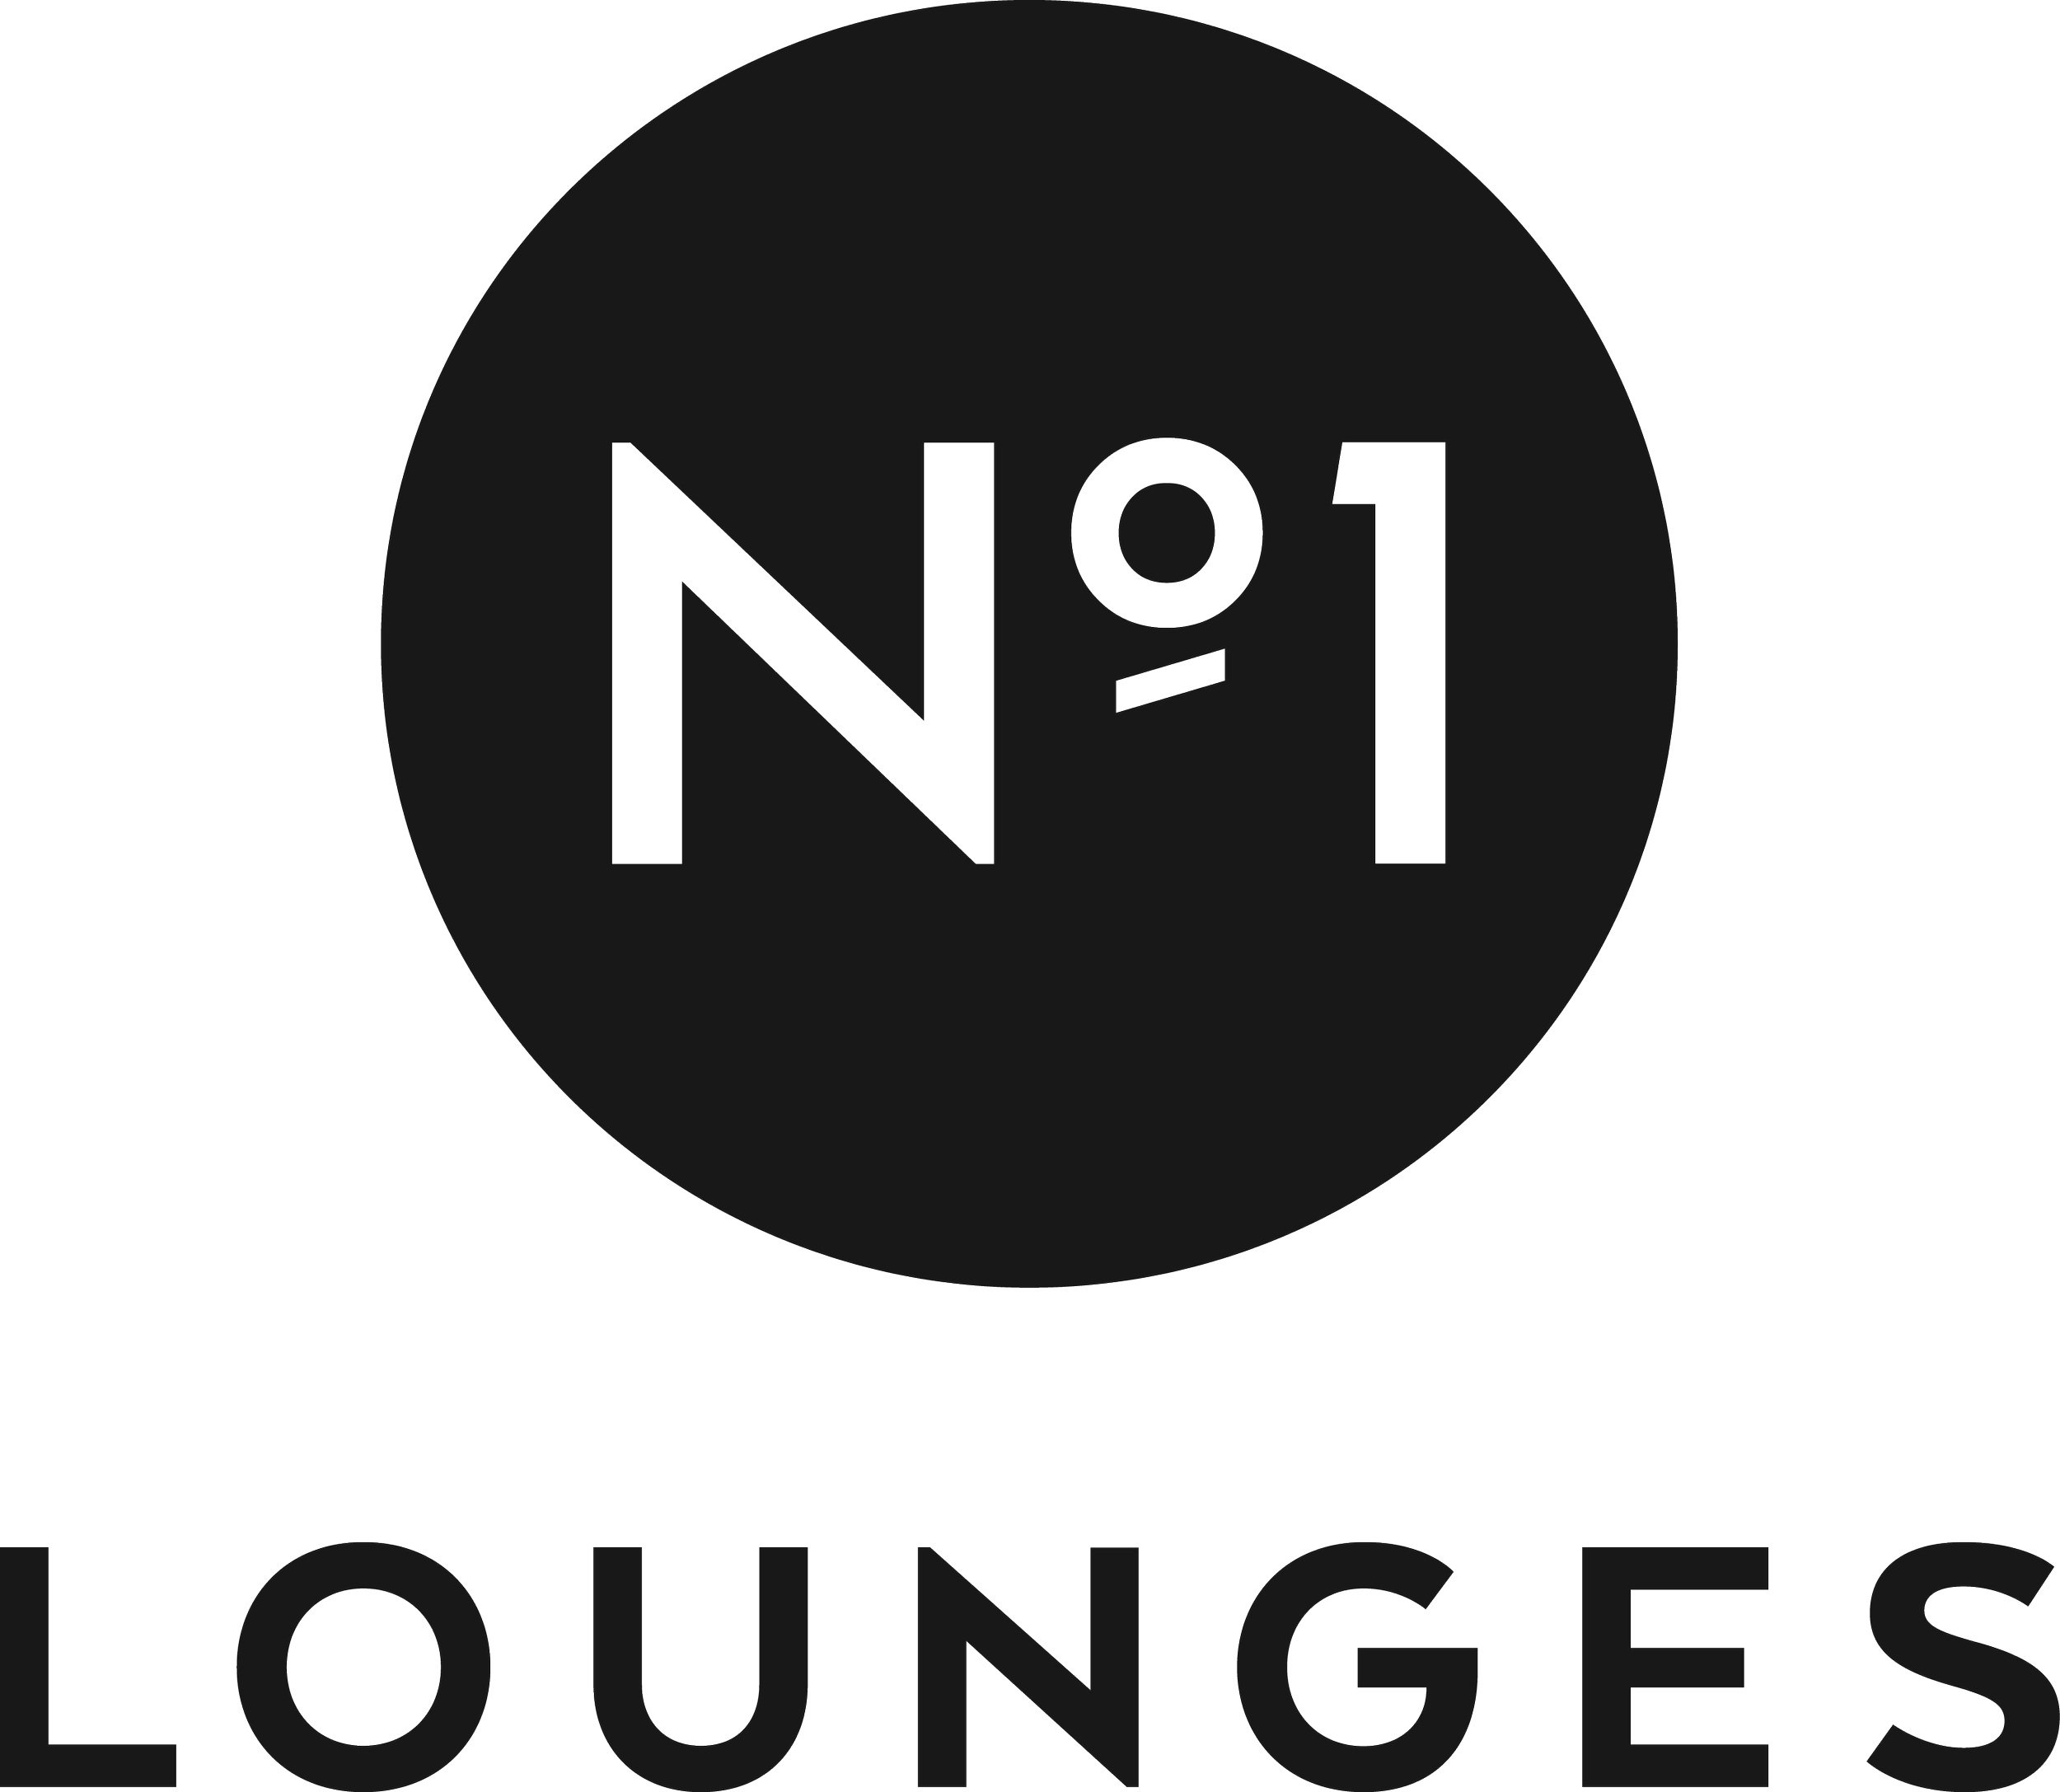 No1-Lounges-logo_sanctifly_partner.jpg